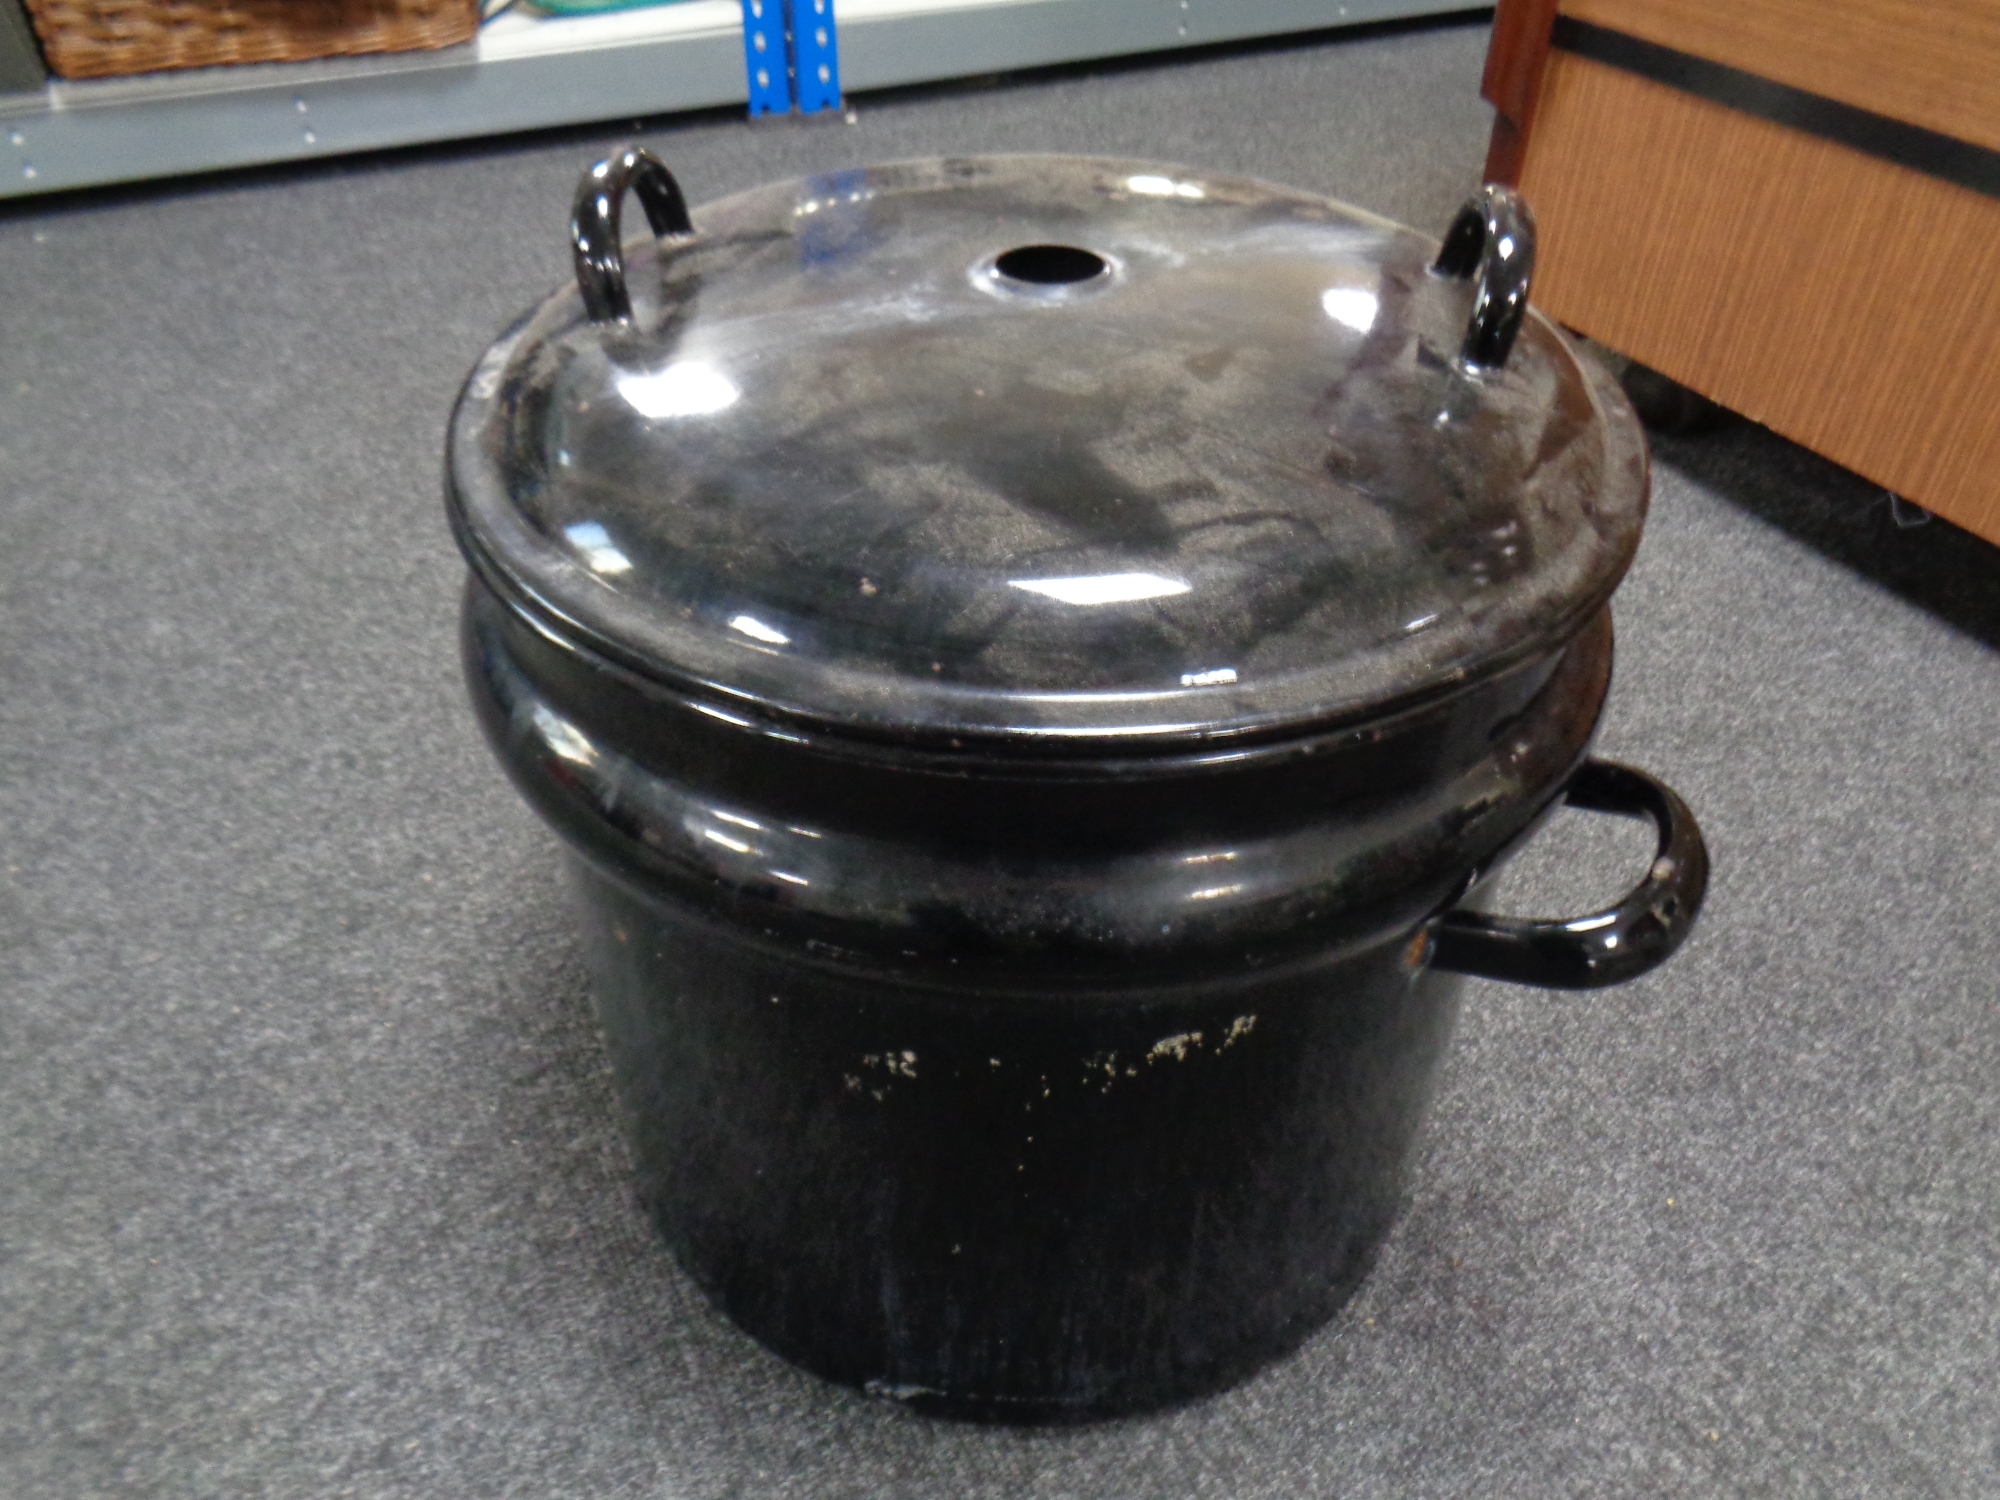 A 20th century galvanised enamelled lidded pot